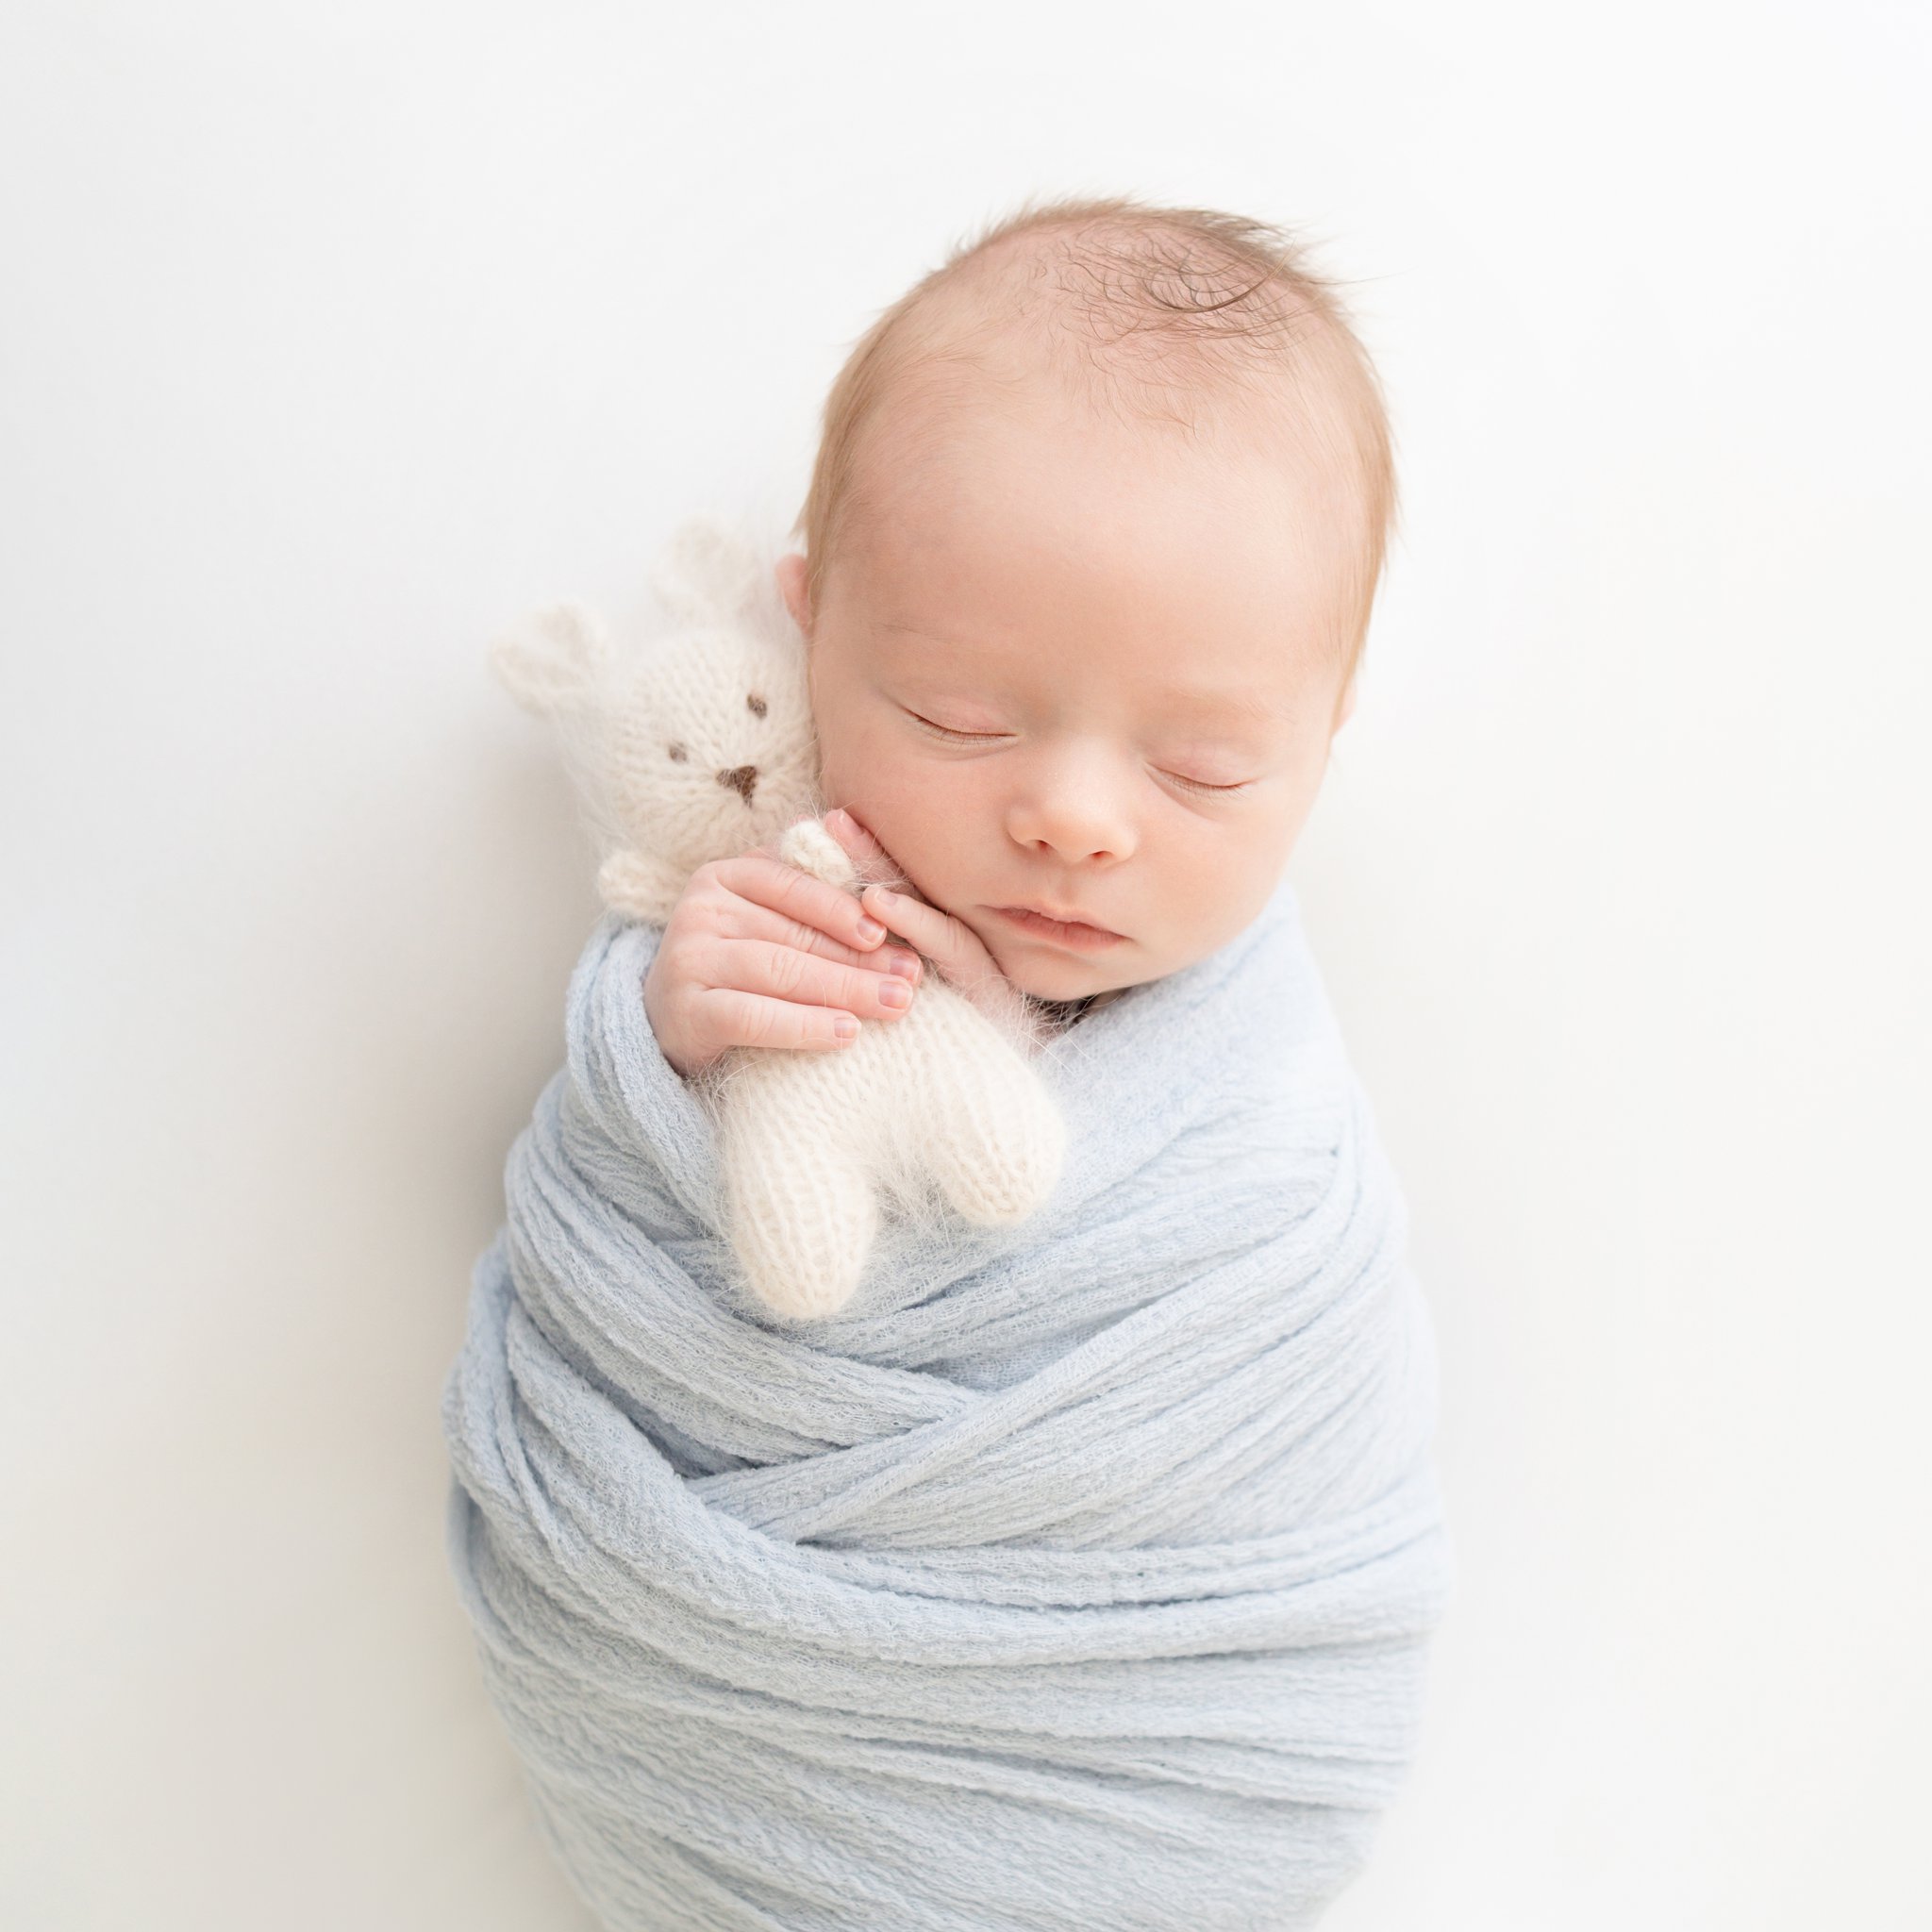 Newborn swaddled in blue holding soft white knit bunny stuffed animal. 